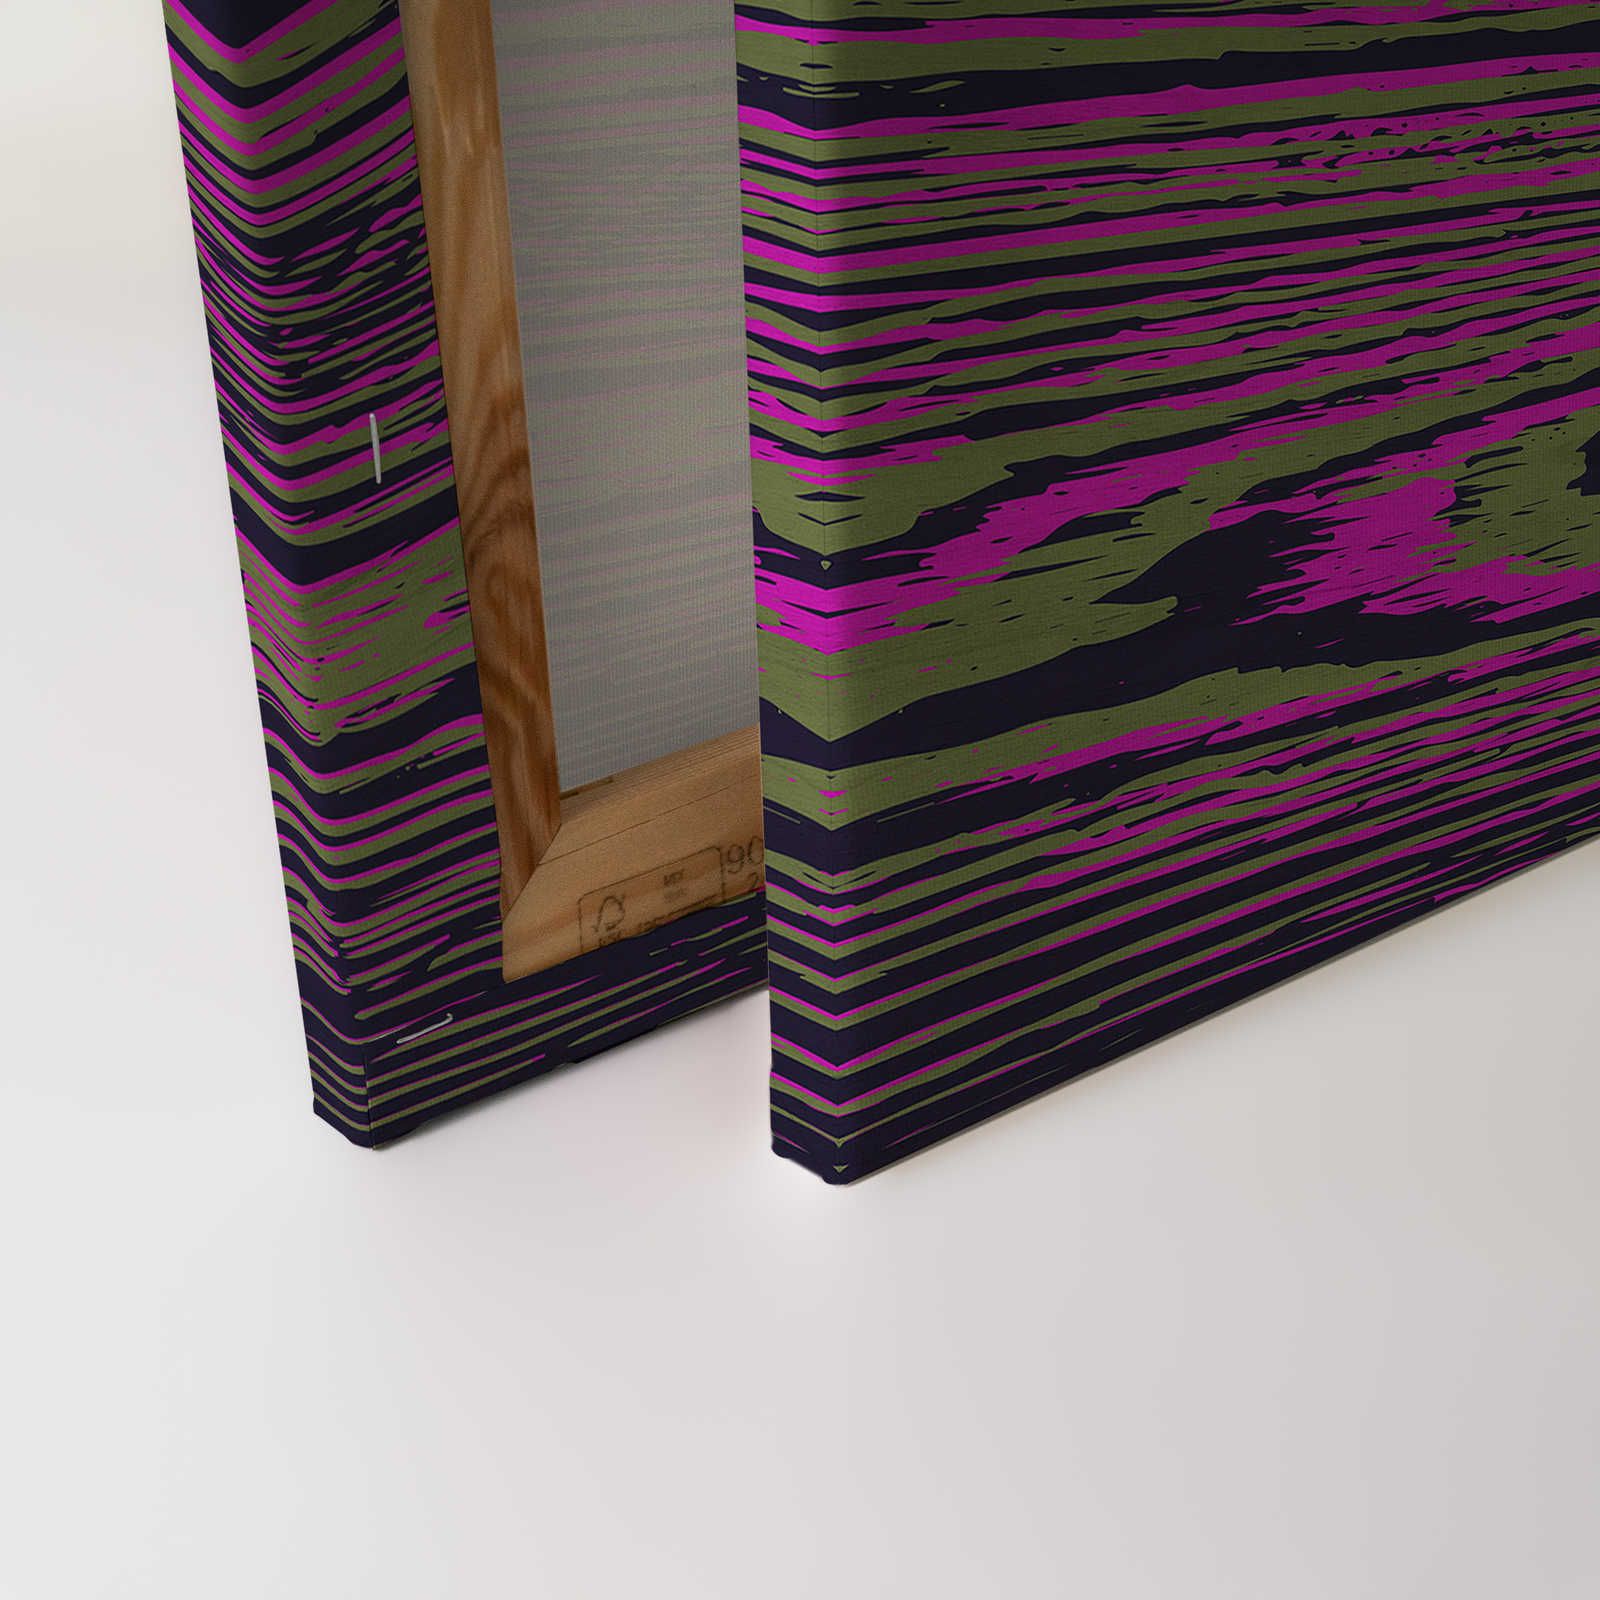             Kontiki 2 - Leinwandbild Neonfarbene Holzmaserung, Pink & Schwarz – 0,90 m x 0,60 m
        